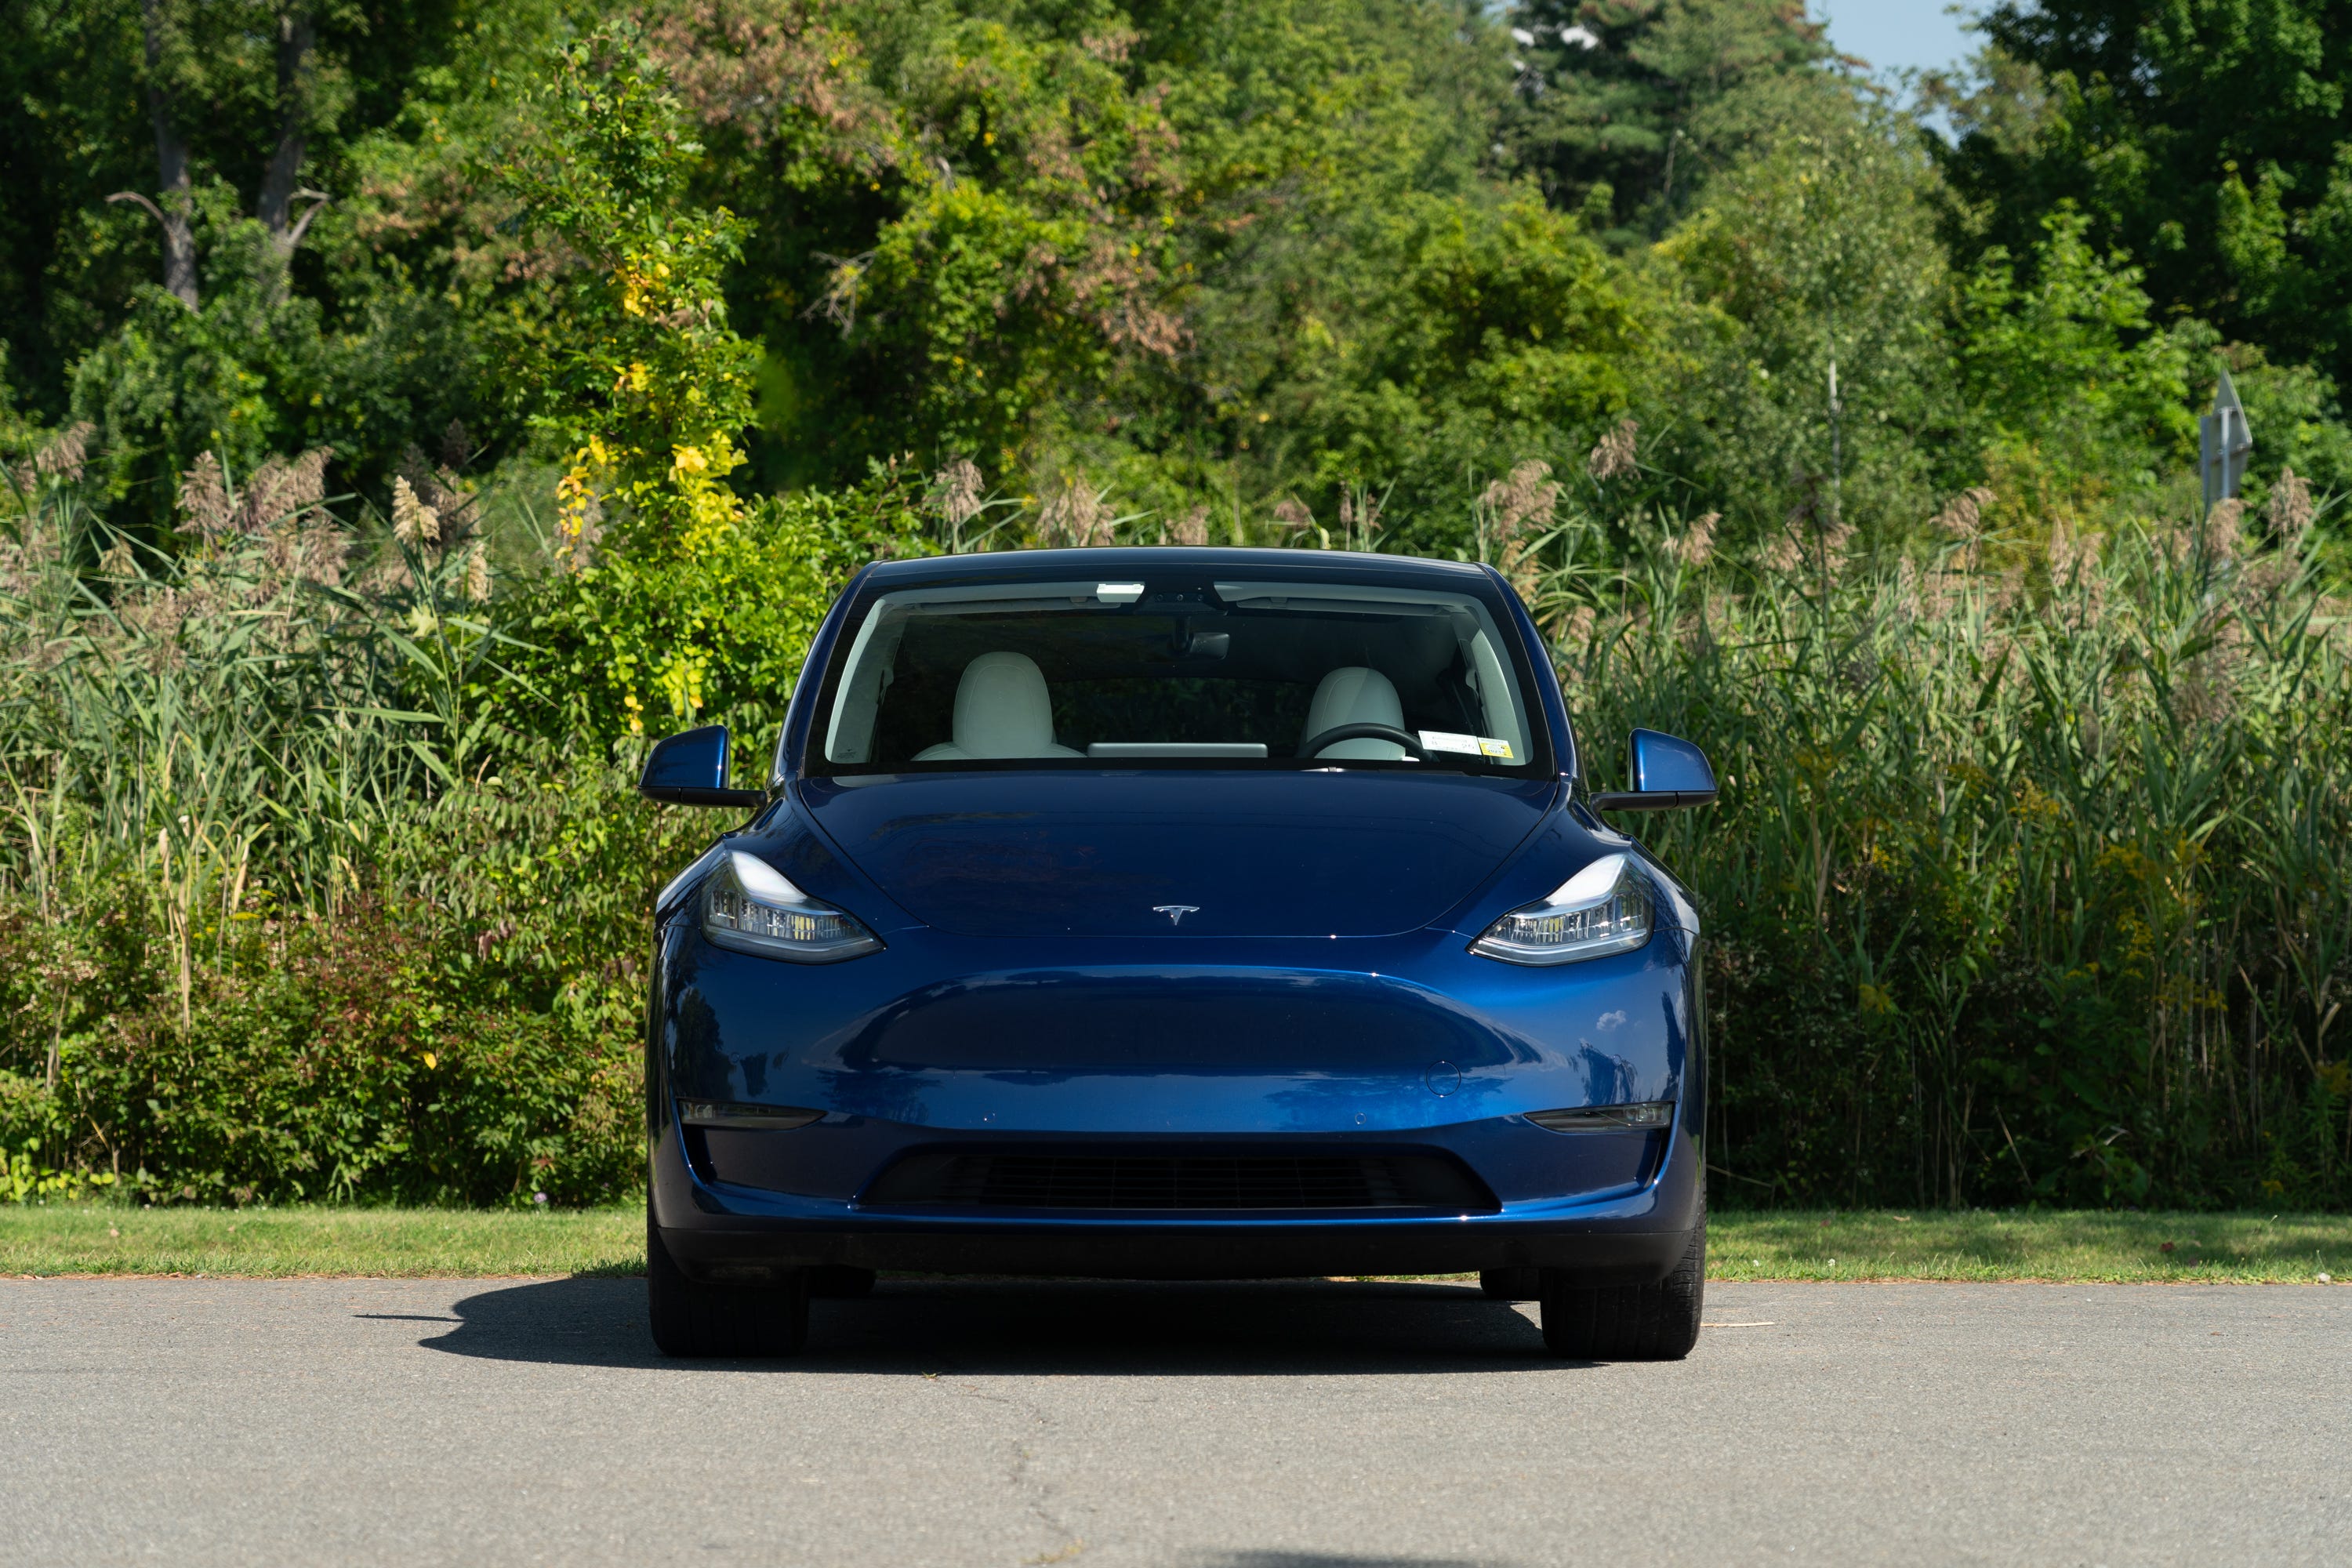 Tesla 'phantom braking' more common than previously reported